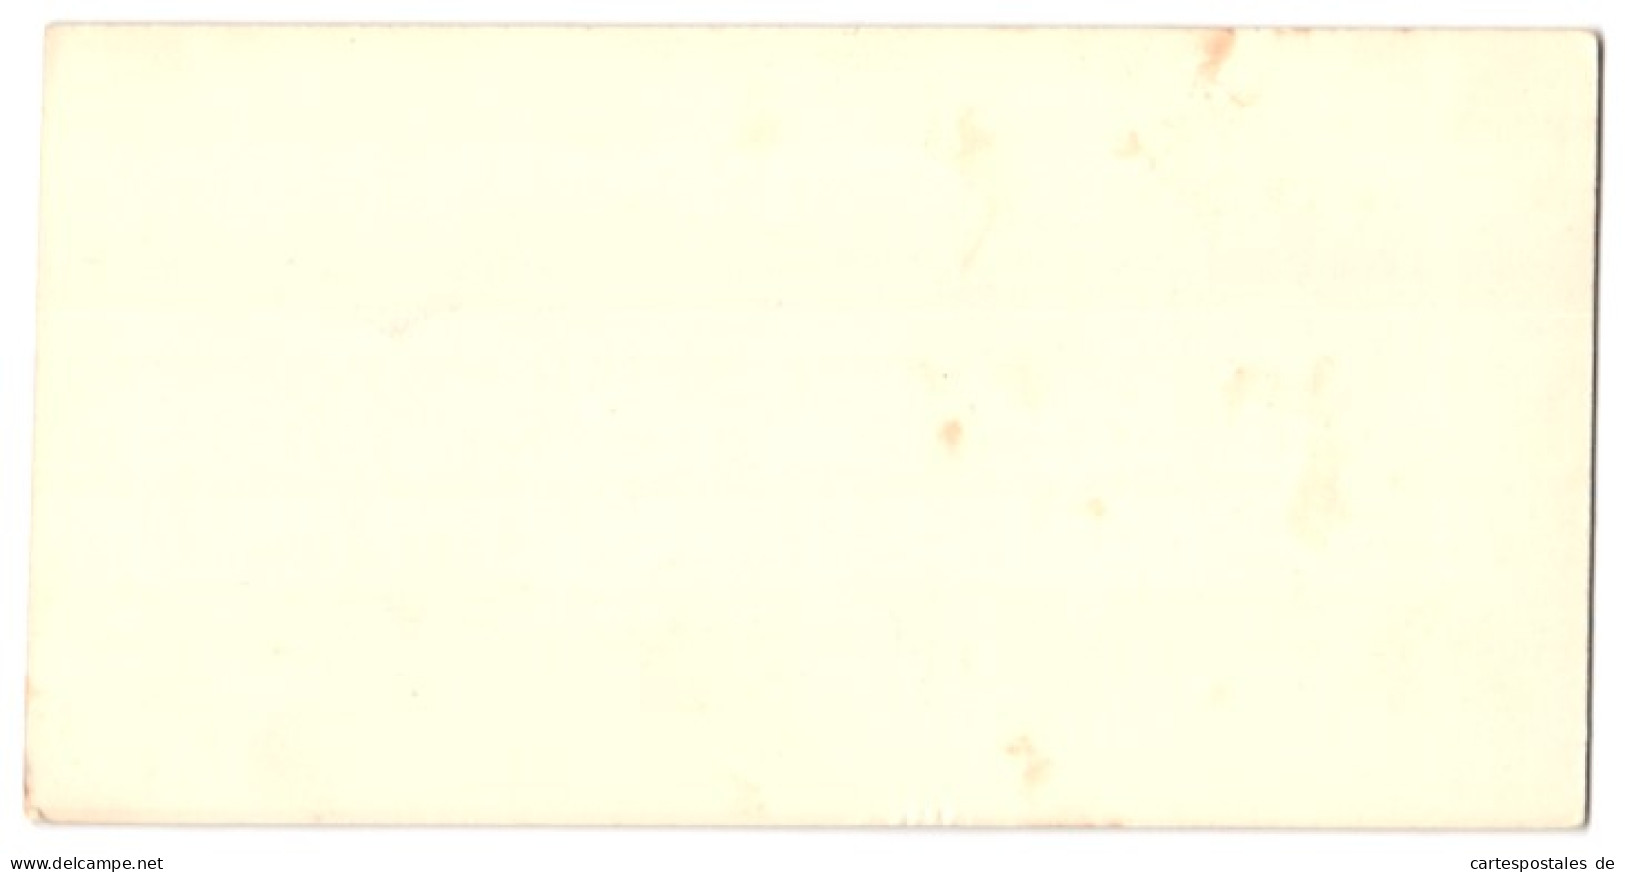 Stereo-Fotografie Lichtdruck Bedrich Koci, Prag, Ansicht Payagua, Südamerika 1907, Jizni Amerika, Indiani Kmene  - Stereoscoop